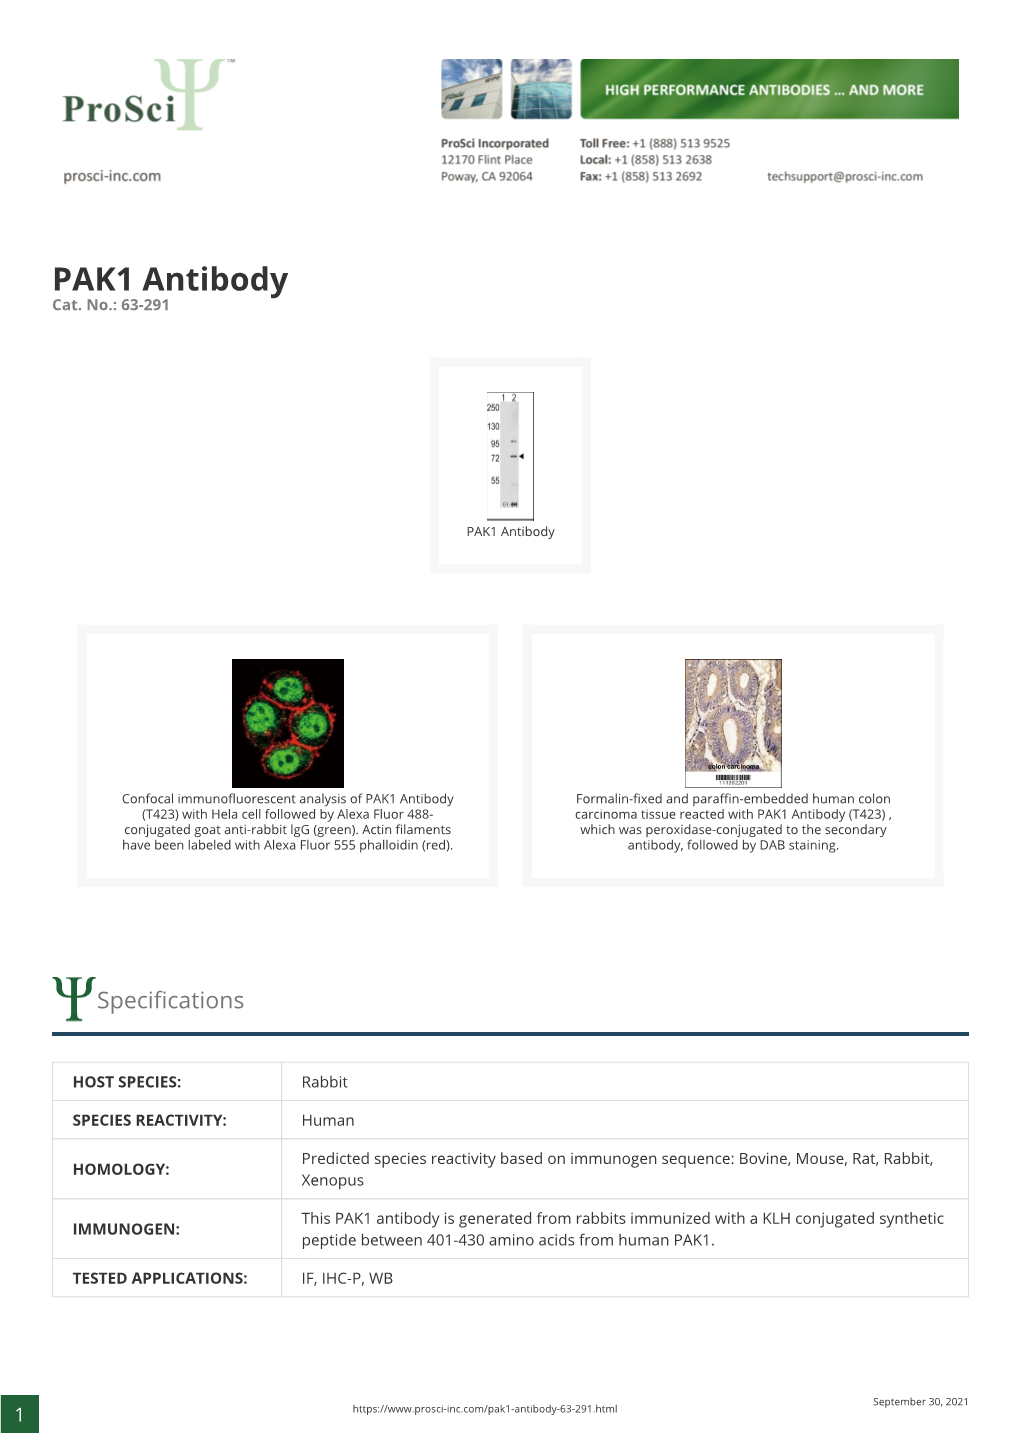 PAK1 Antibody Cat